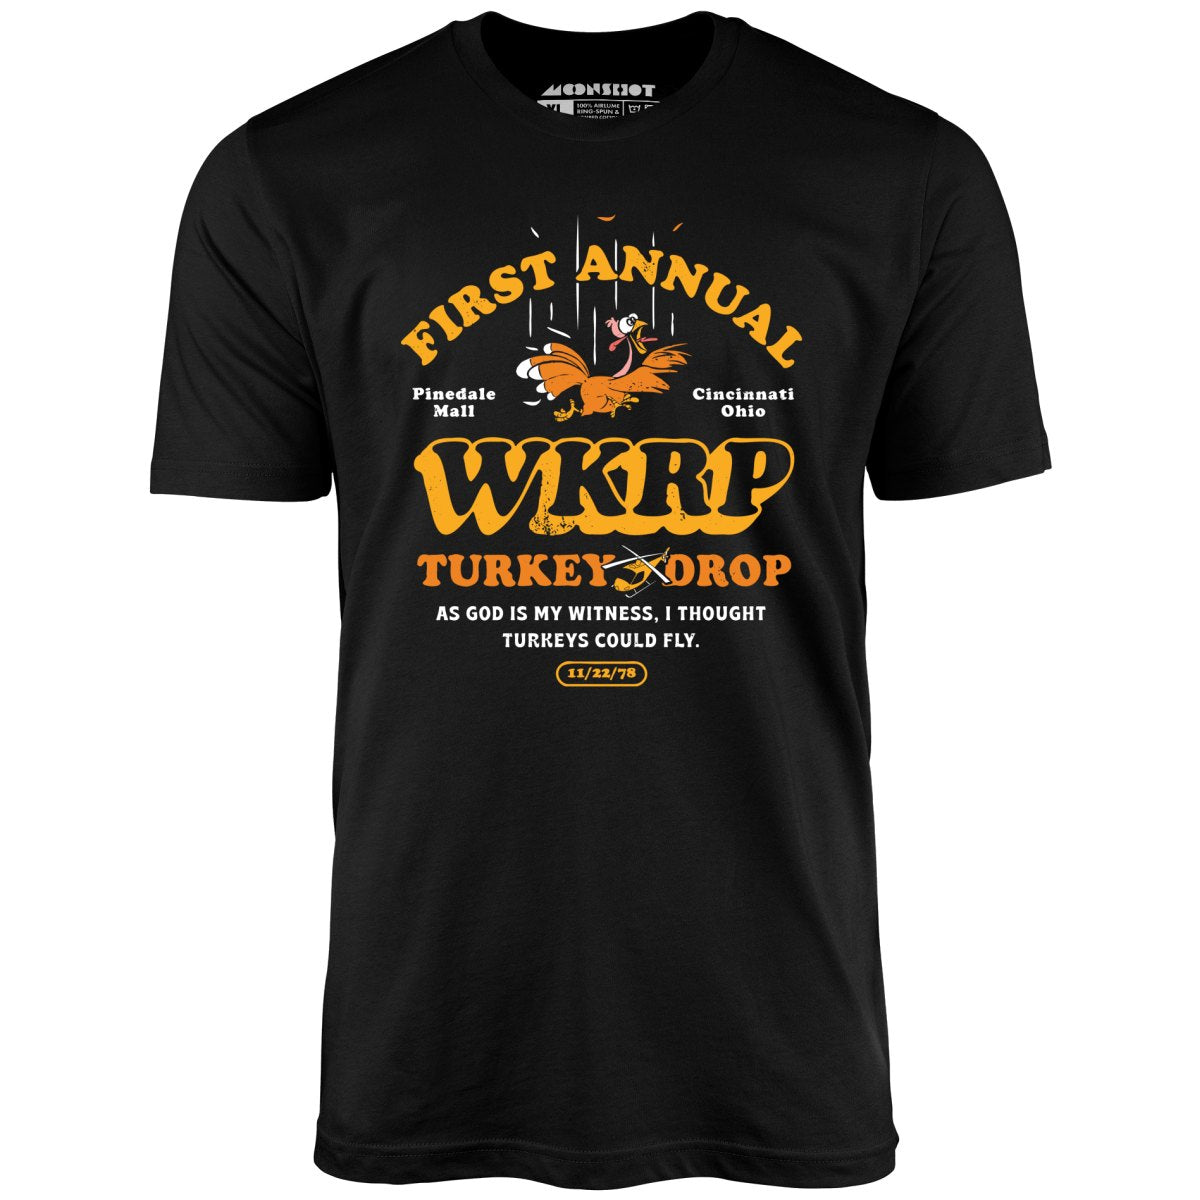 WKRP Turkey Drop - Unisex T-Shirt